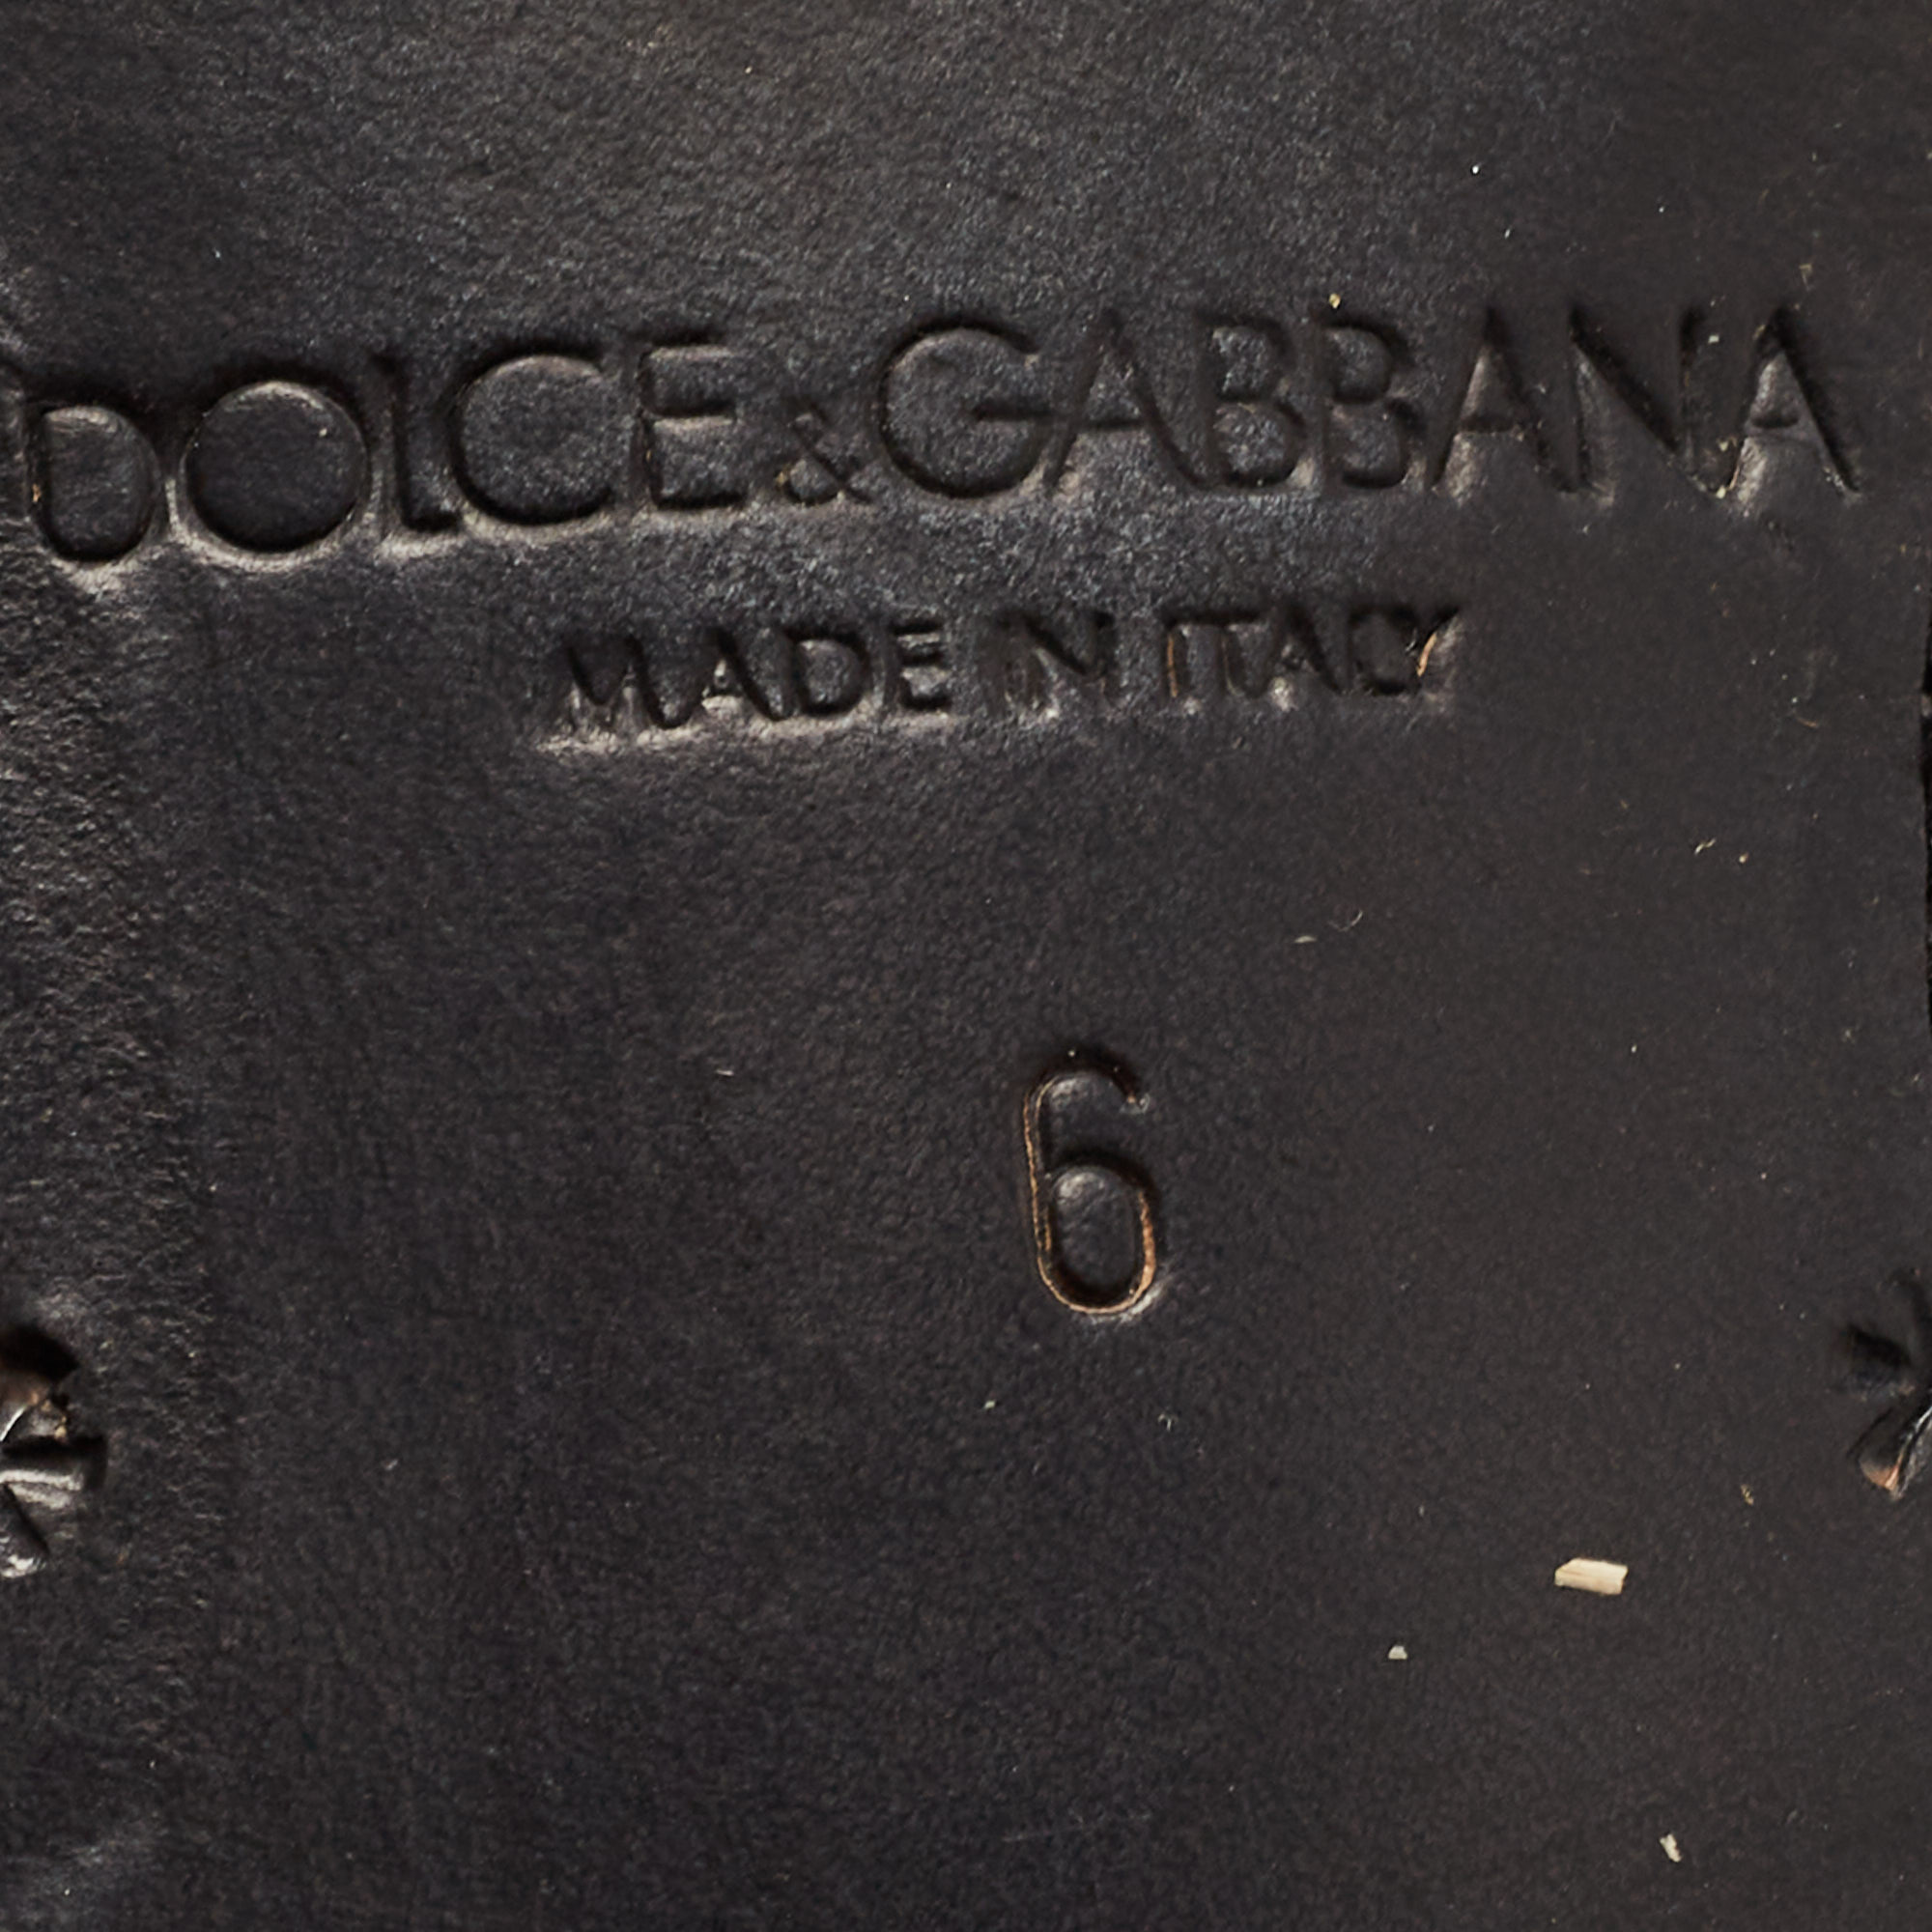 Dolce & Gabbana Black Patent Leather Lace Up Derby Size 40